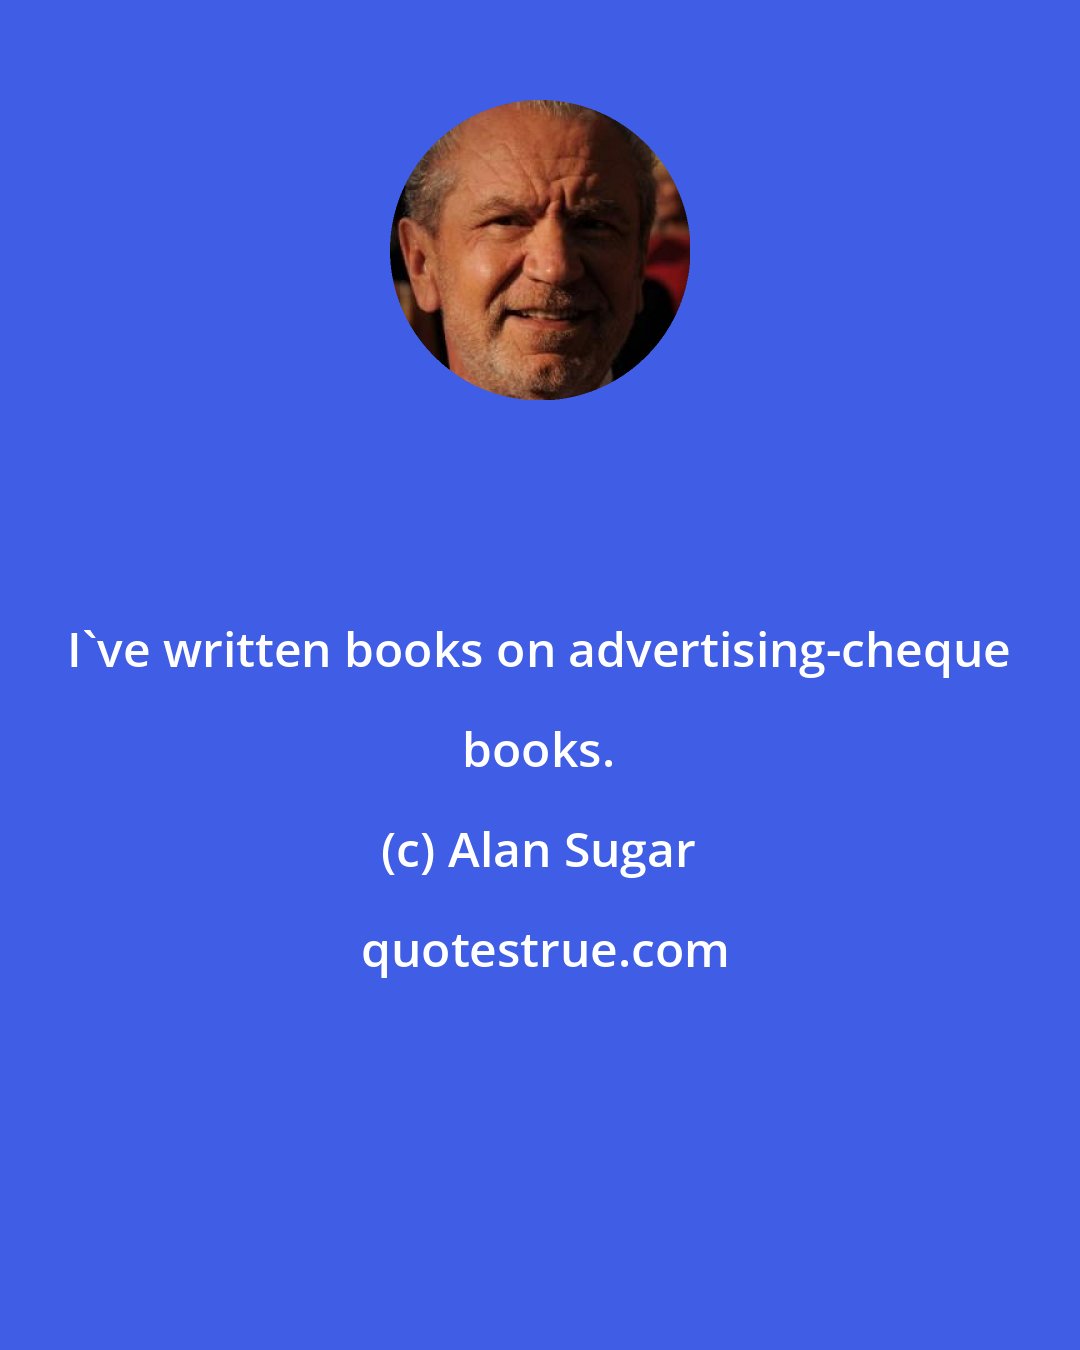 Alan Sugar: I've written books on advertising-cheque books.